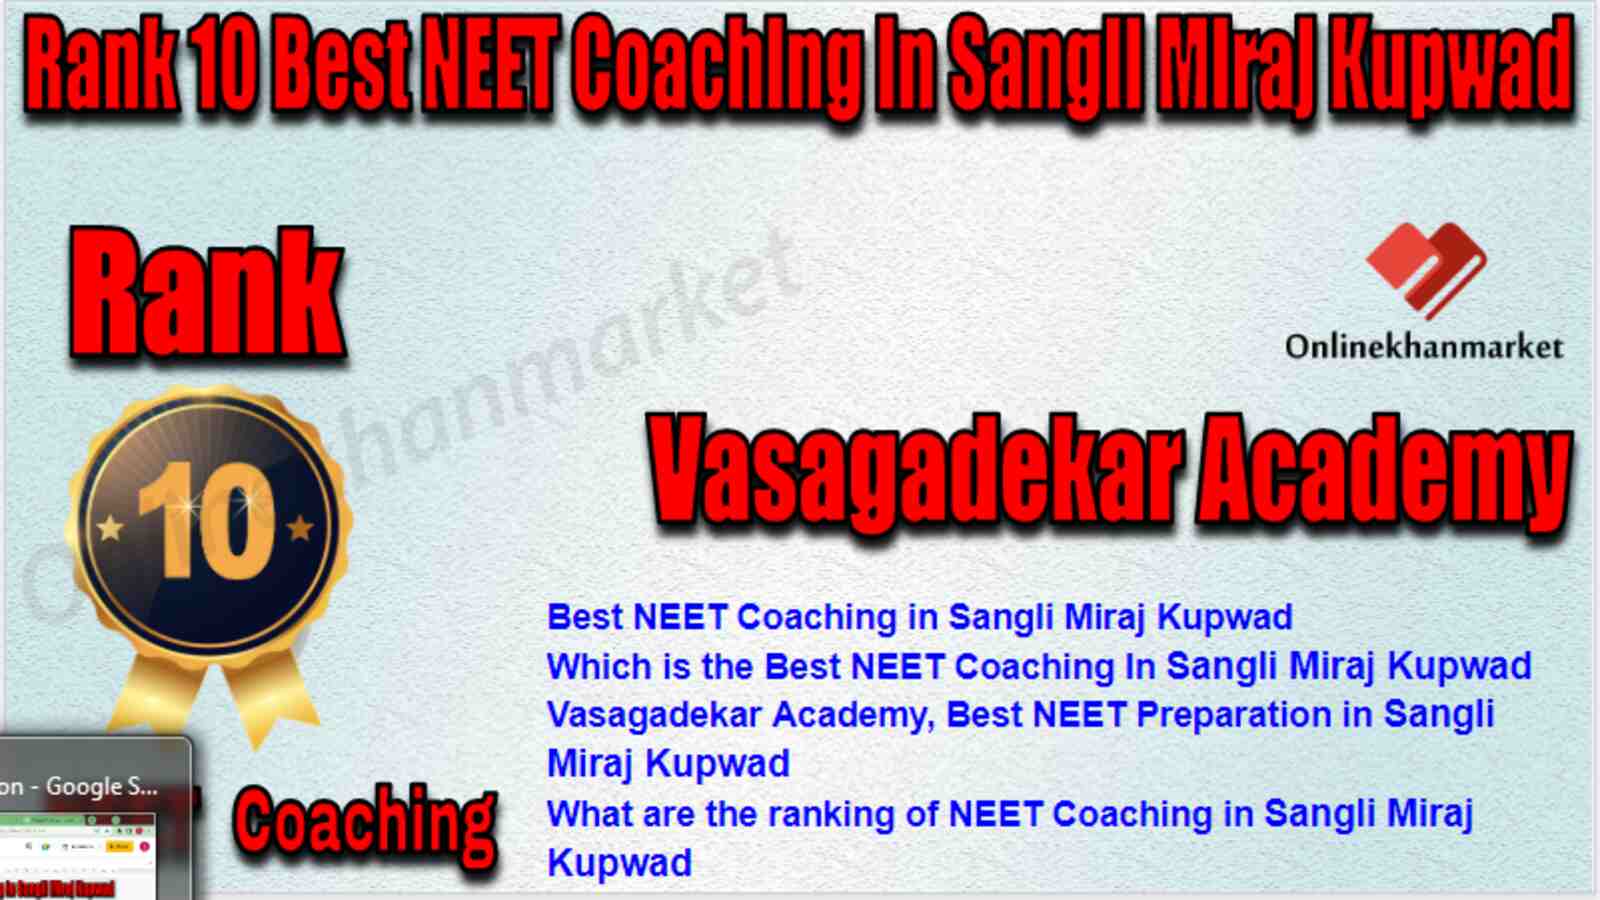 Rank 10 Best NEET Coaching in Sangli Miraj Kupwad